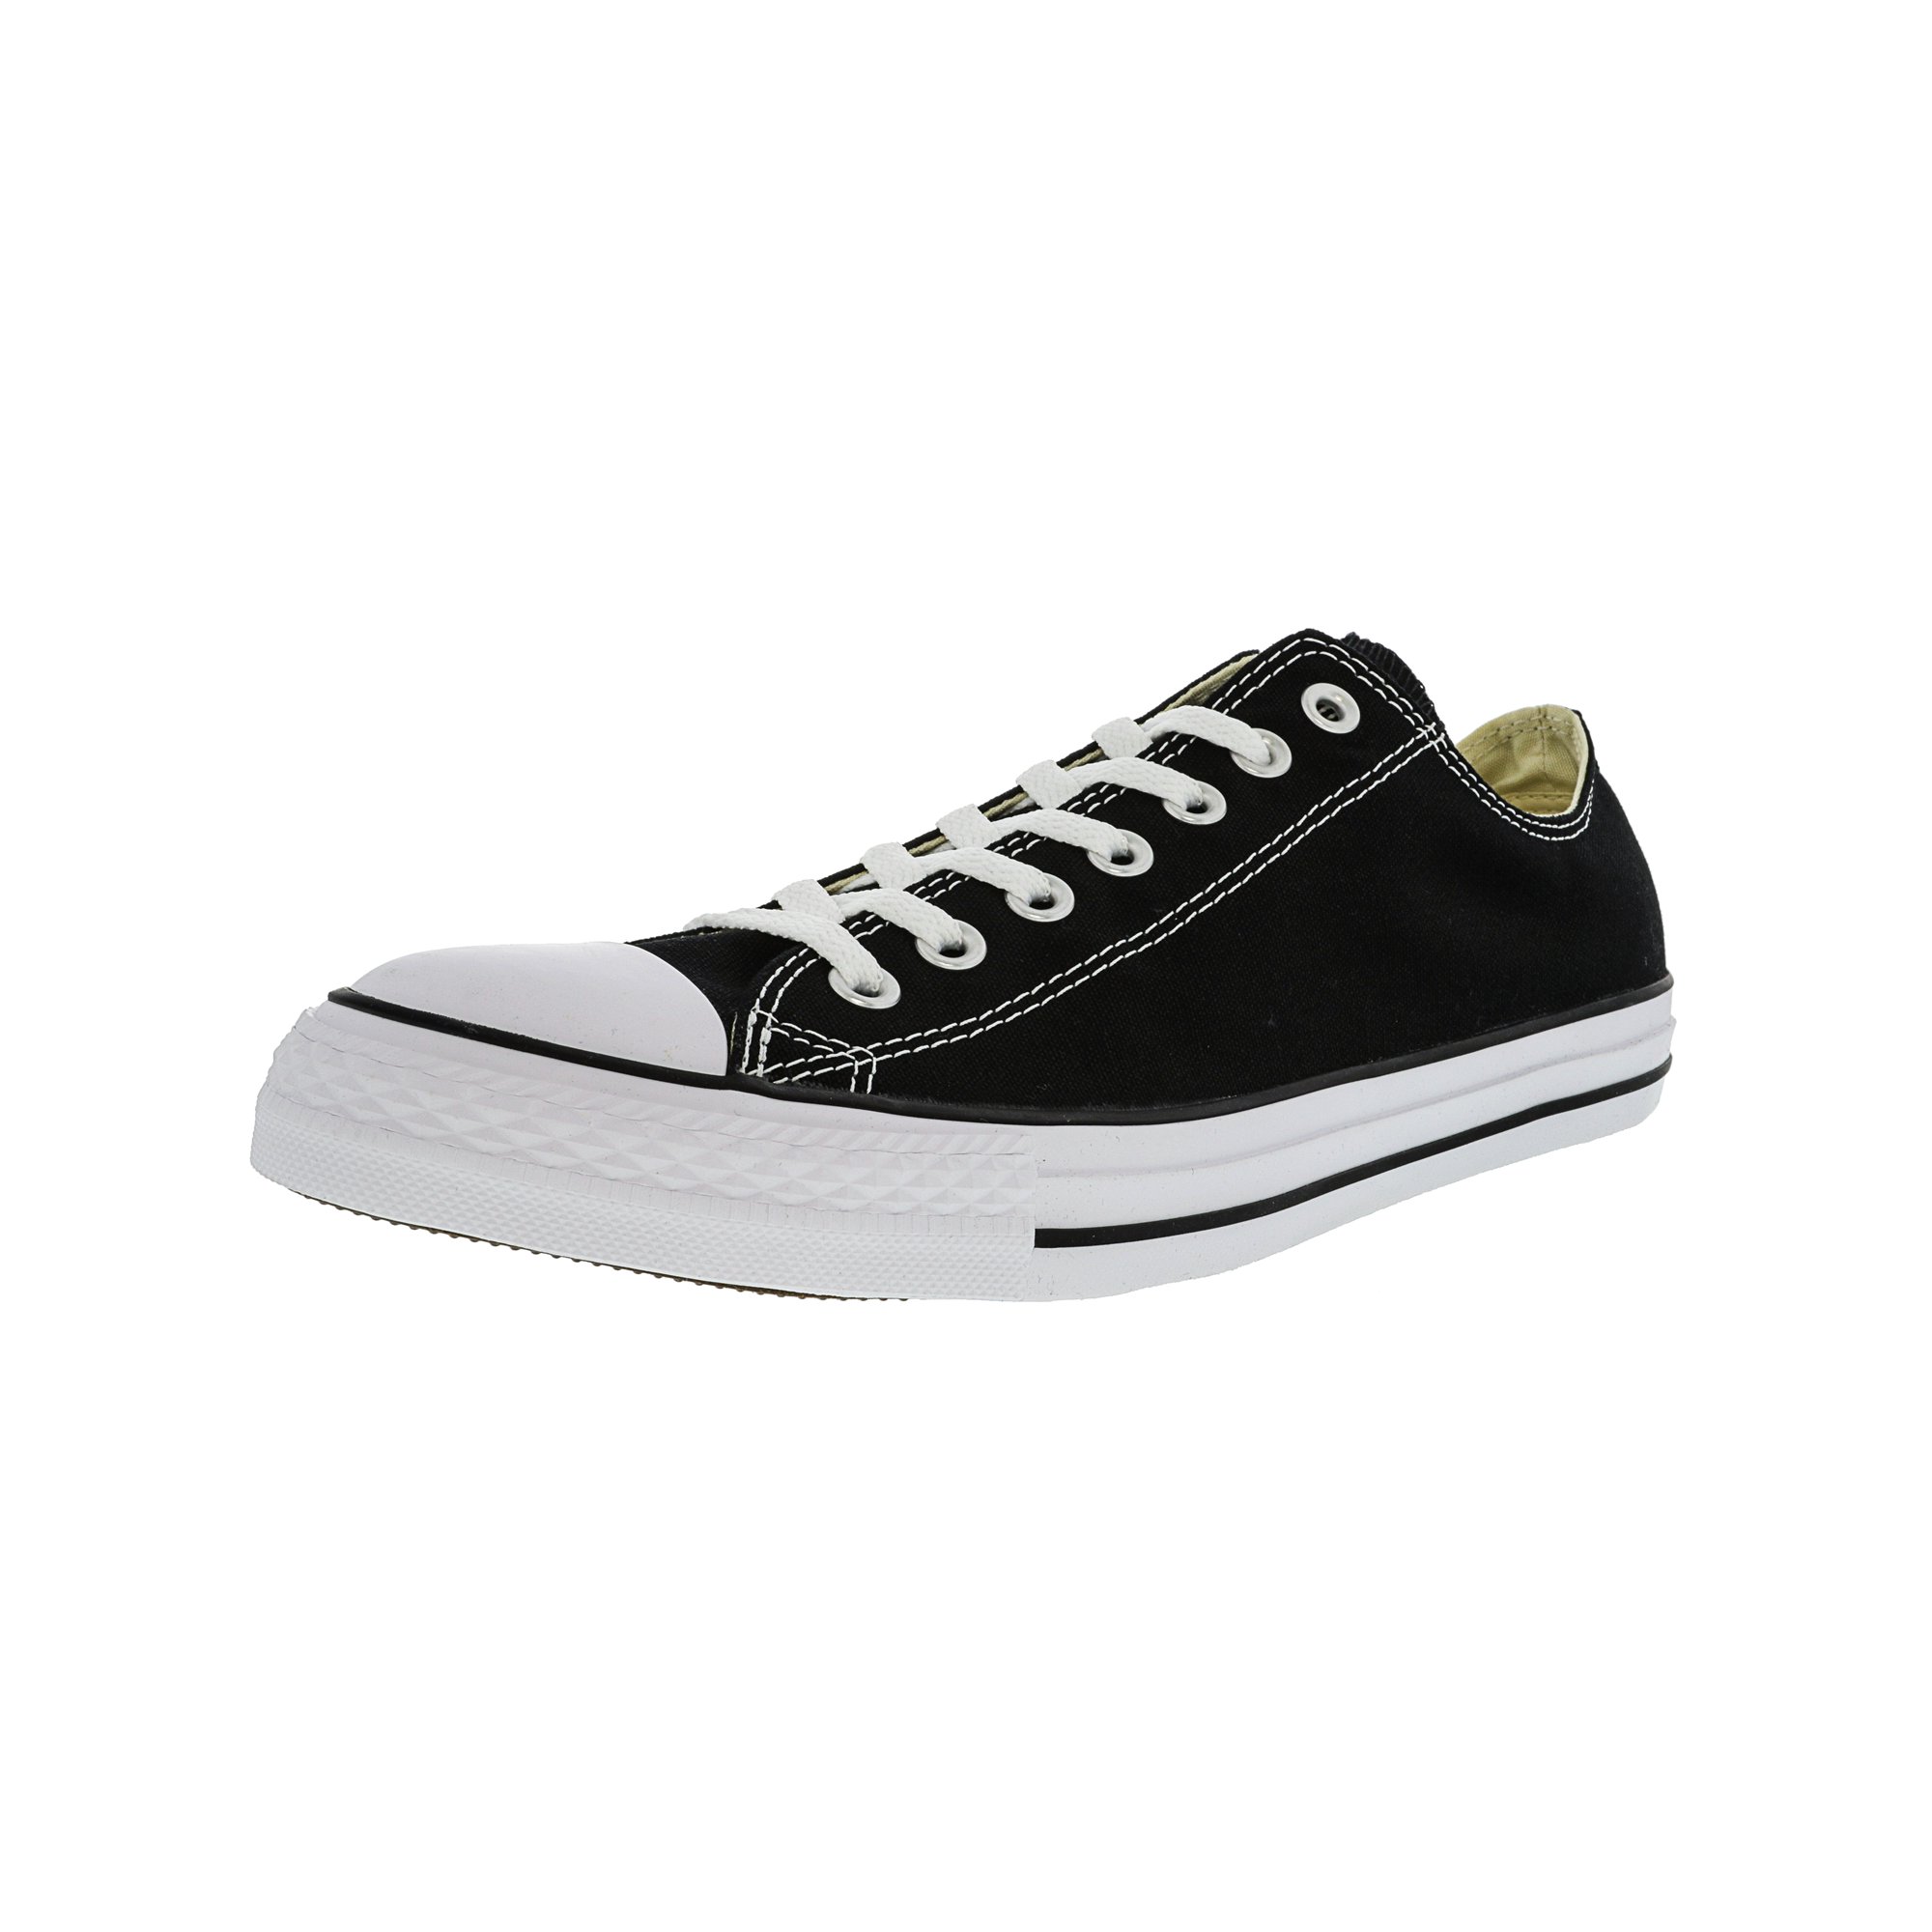 All Ox Black Ankle-High Fashion Sneaker Walmart.com